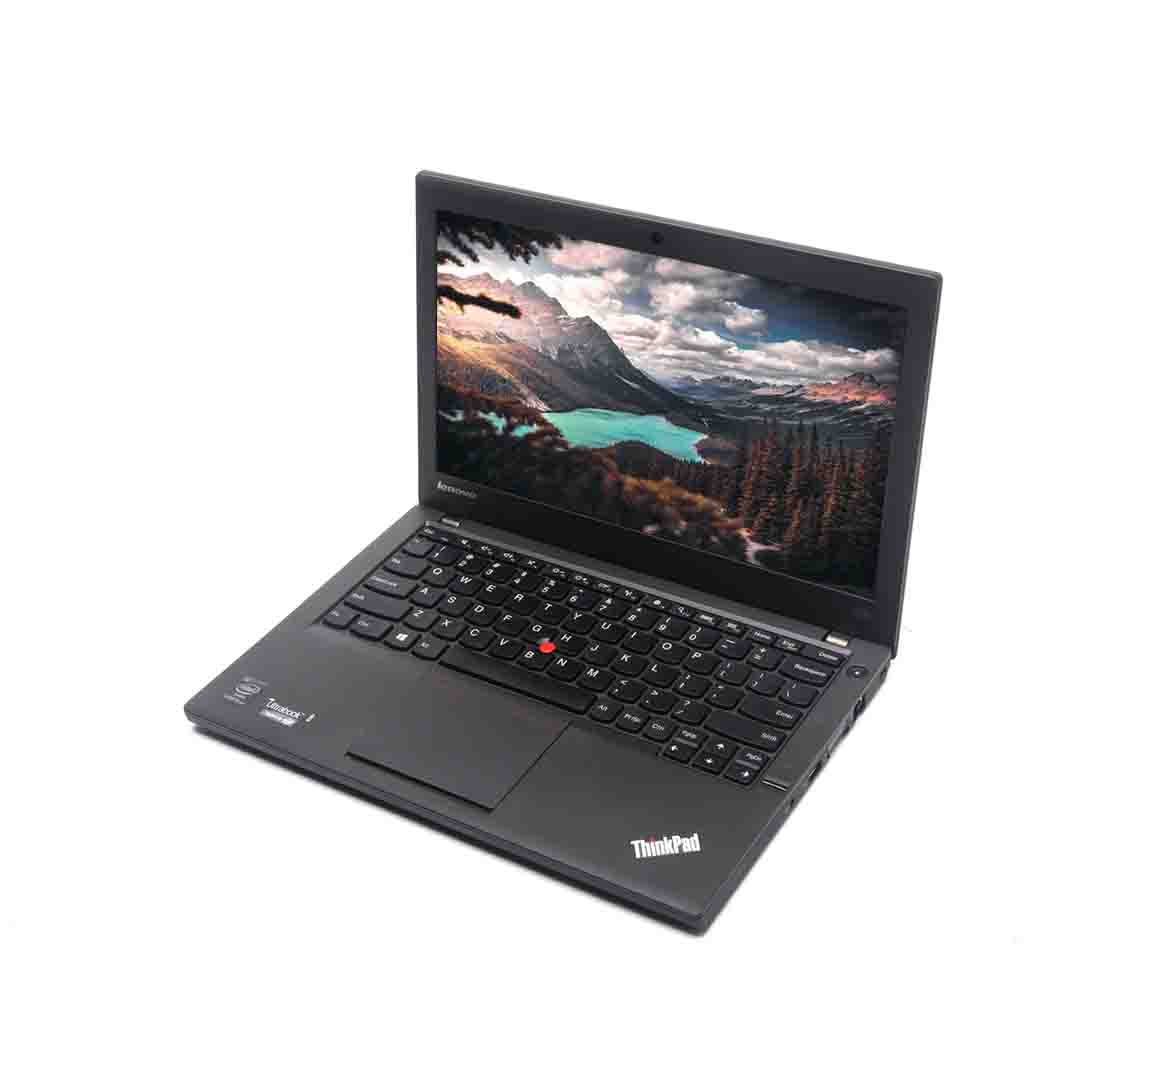 Lenovo ThinkPad X240 Business Laptop, Intel Core i5-4th Gen. CPU